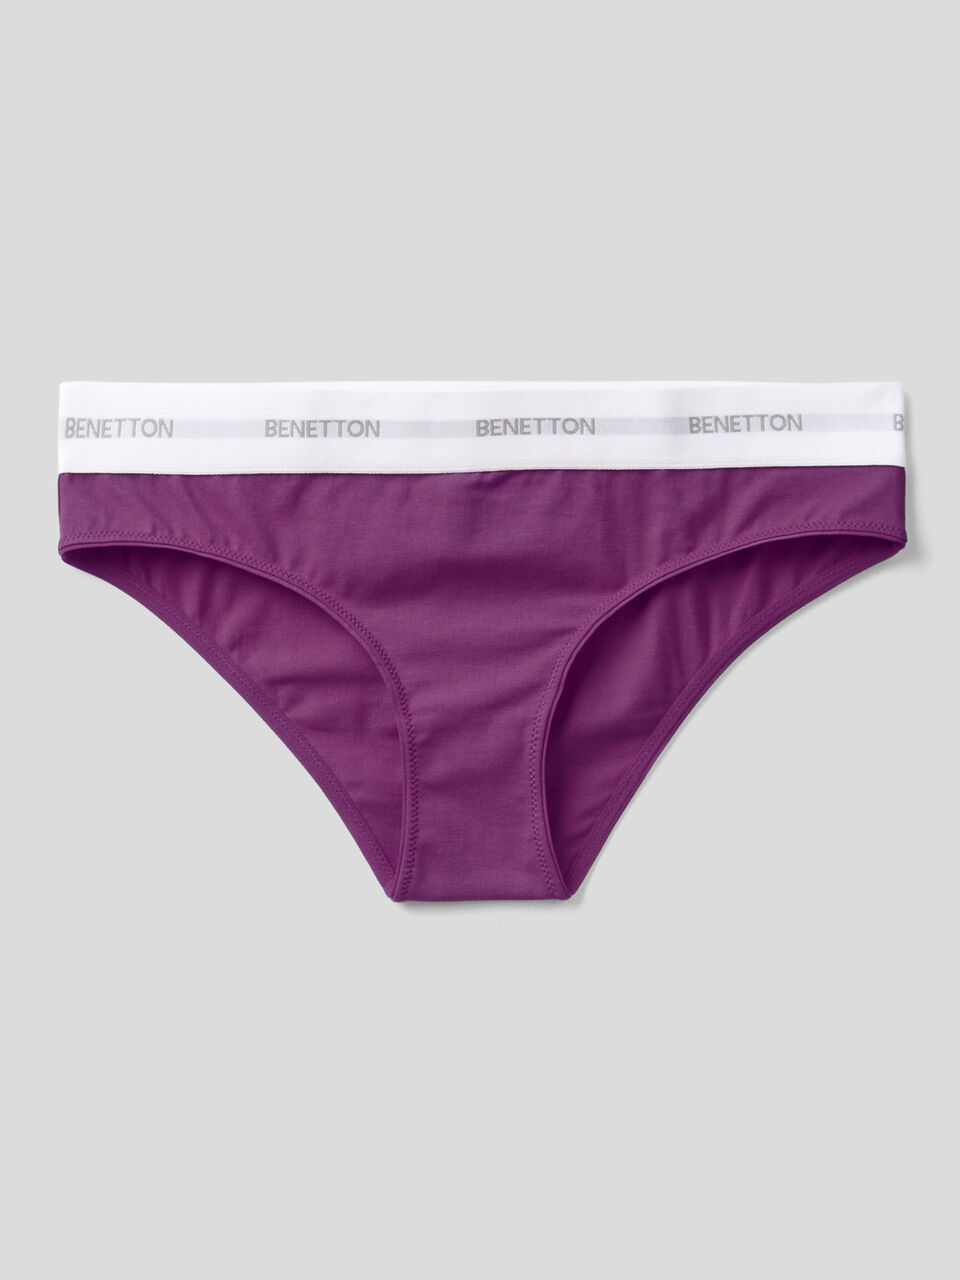 Entyinea Womens Cotton Underwear Breathable Cooling Stripes Brief Underwear  Purple One Size 